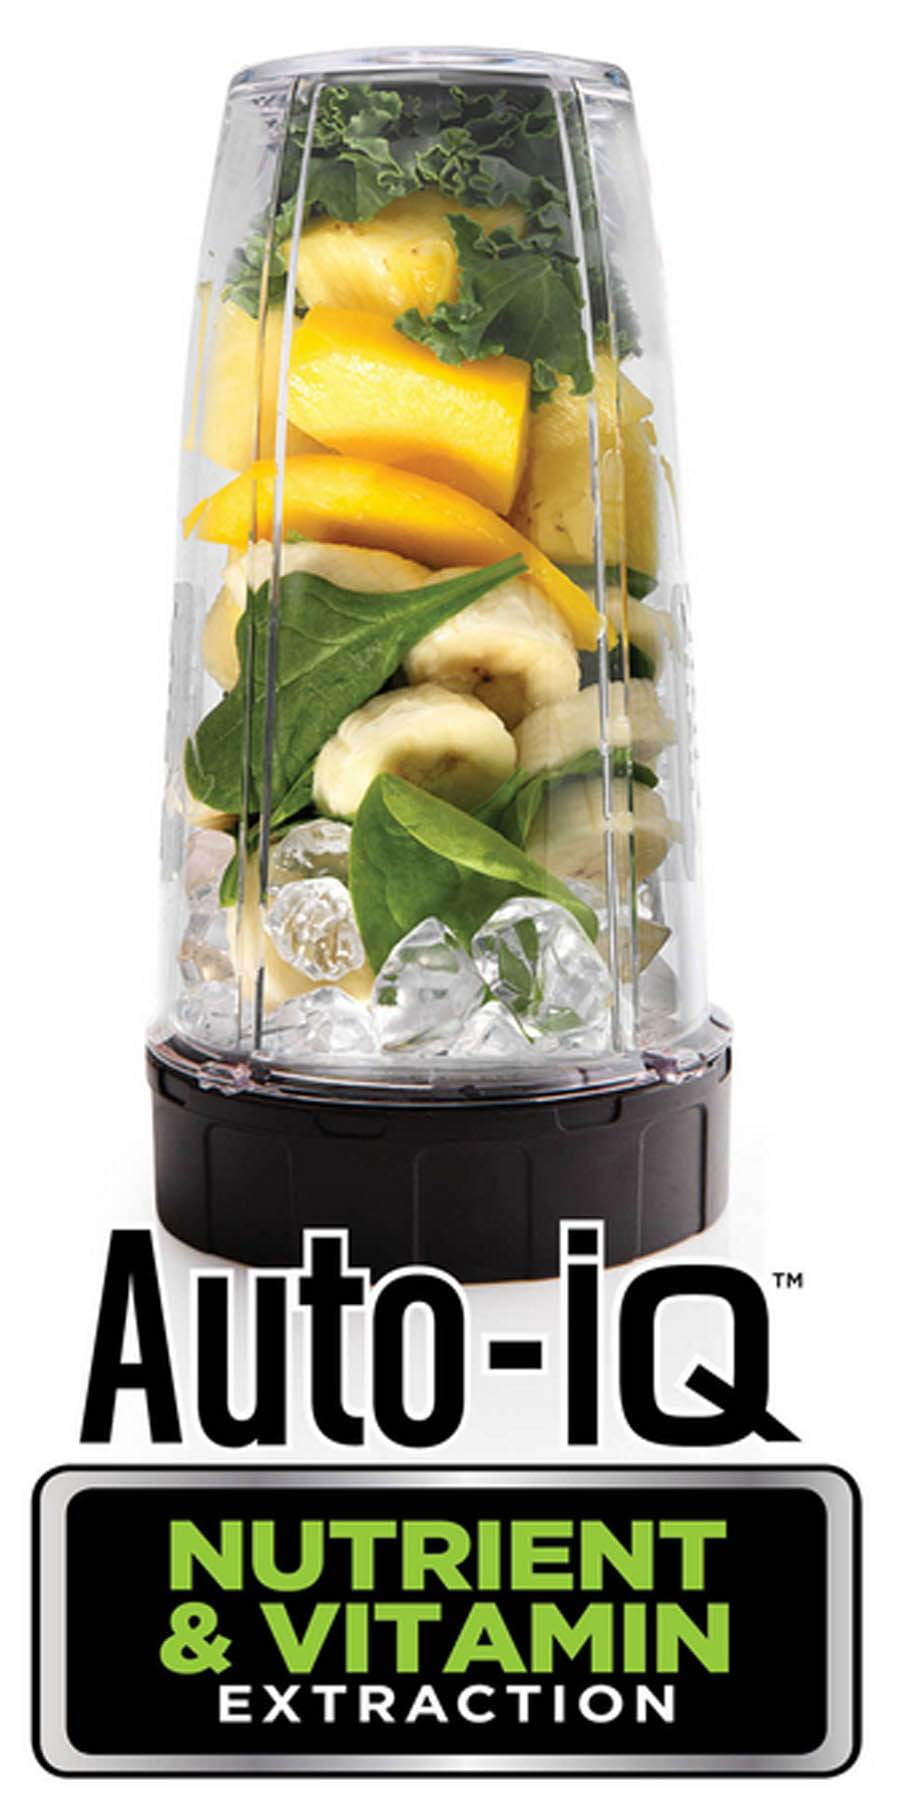 Nutri Ninja® Blender System with Auto-iQ™ (BL680 Series) 